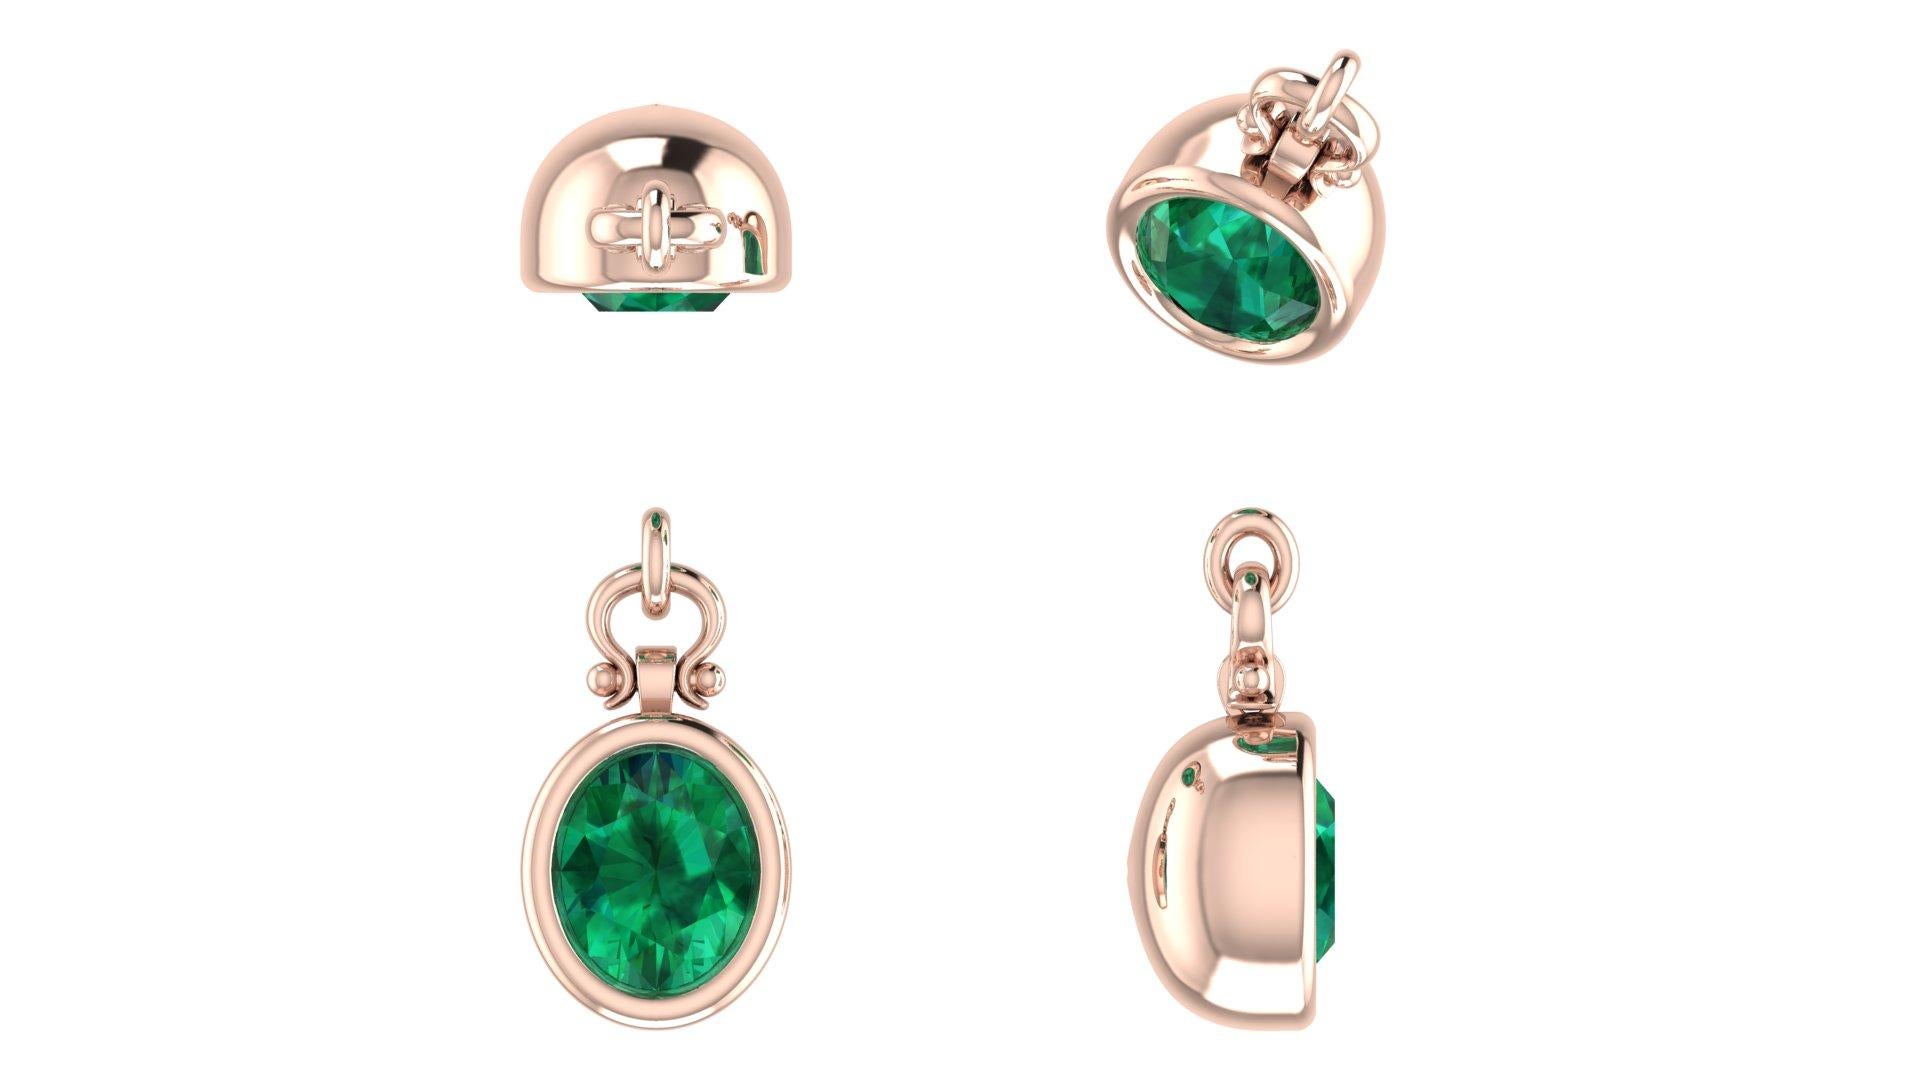 IGITL Certified 2.73 Carat Oval Cut Emerald Pendant Necklace in 18k For Sale 2